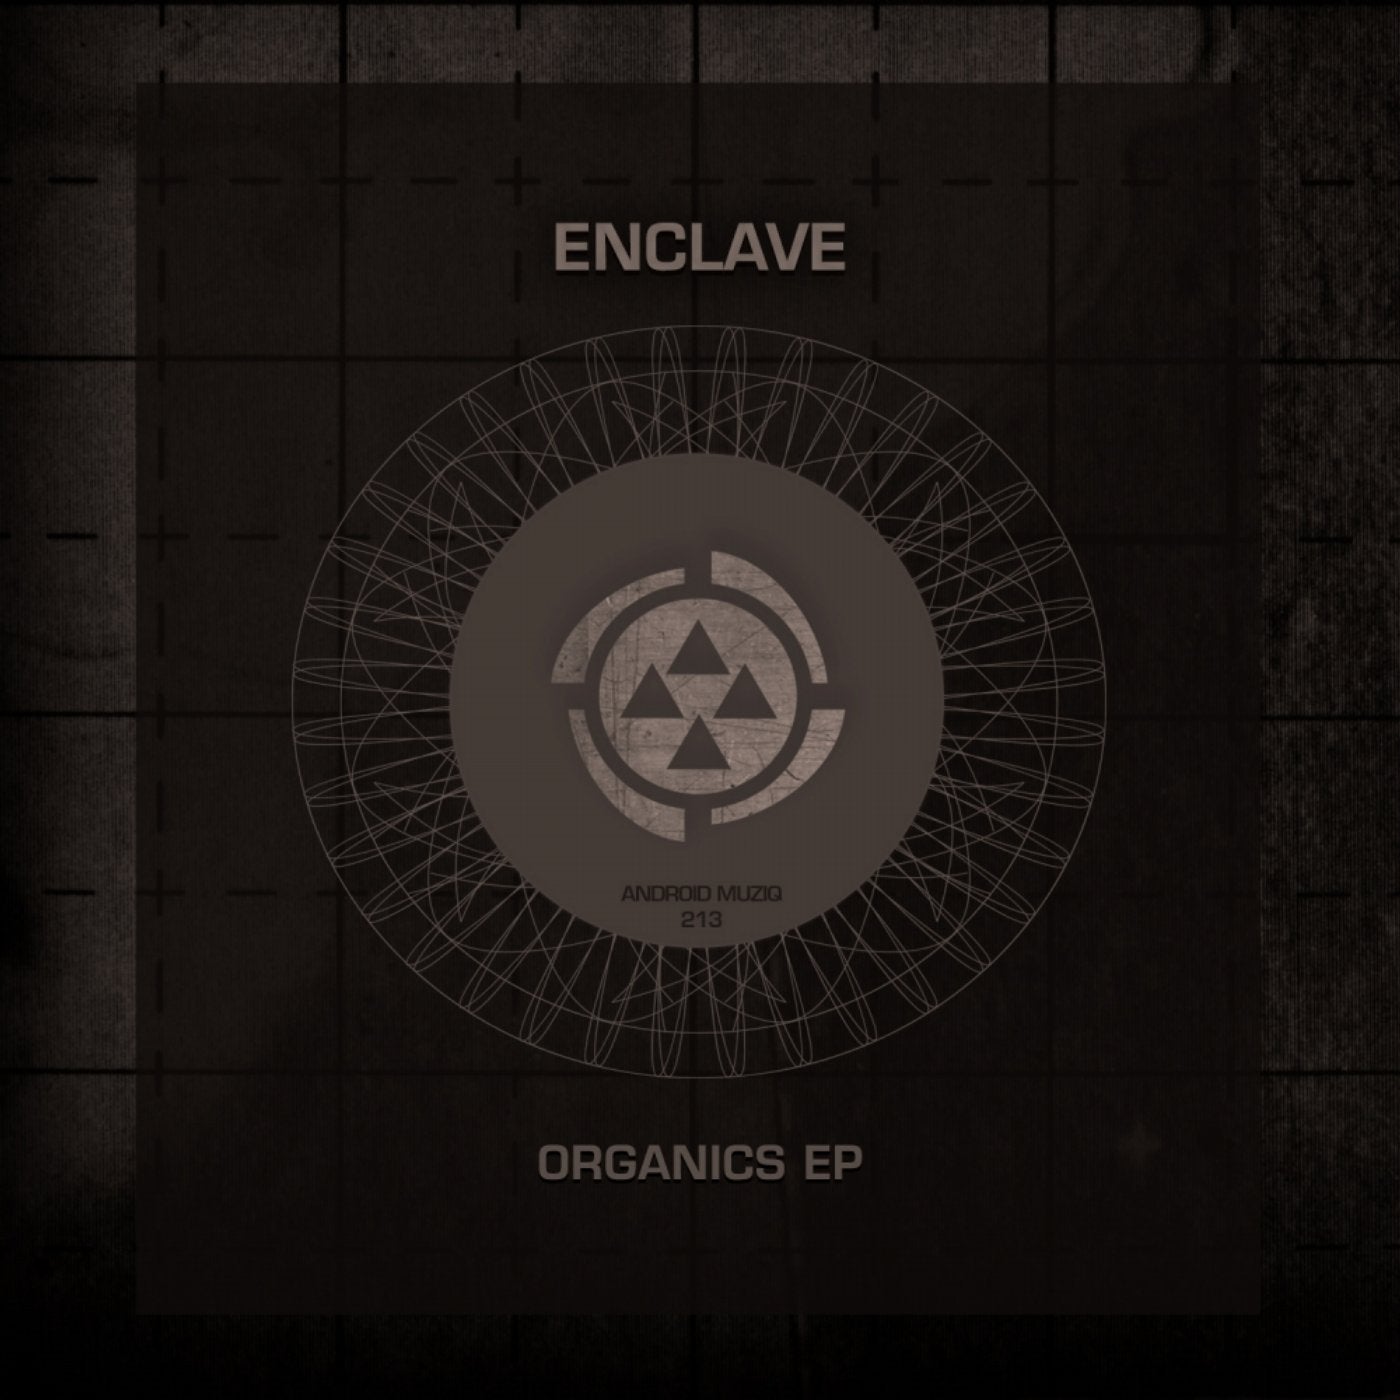 Organics EP